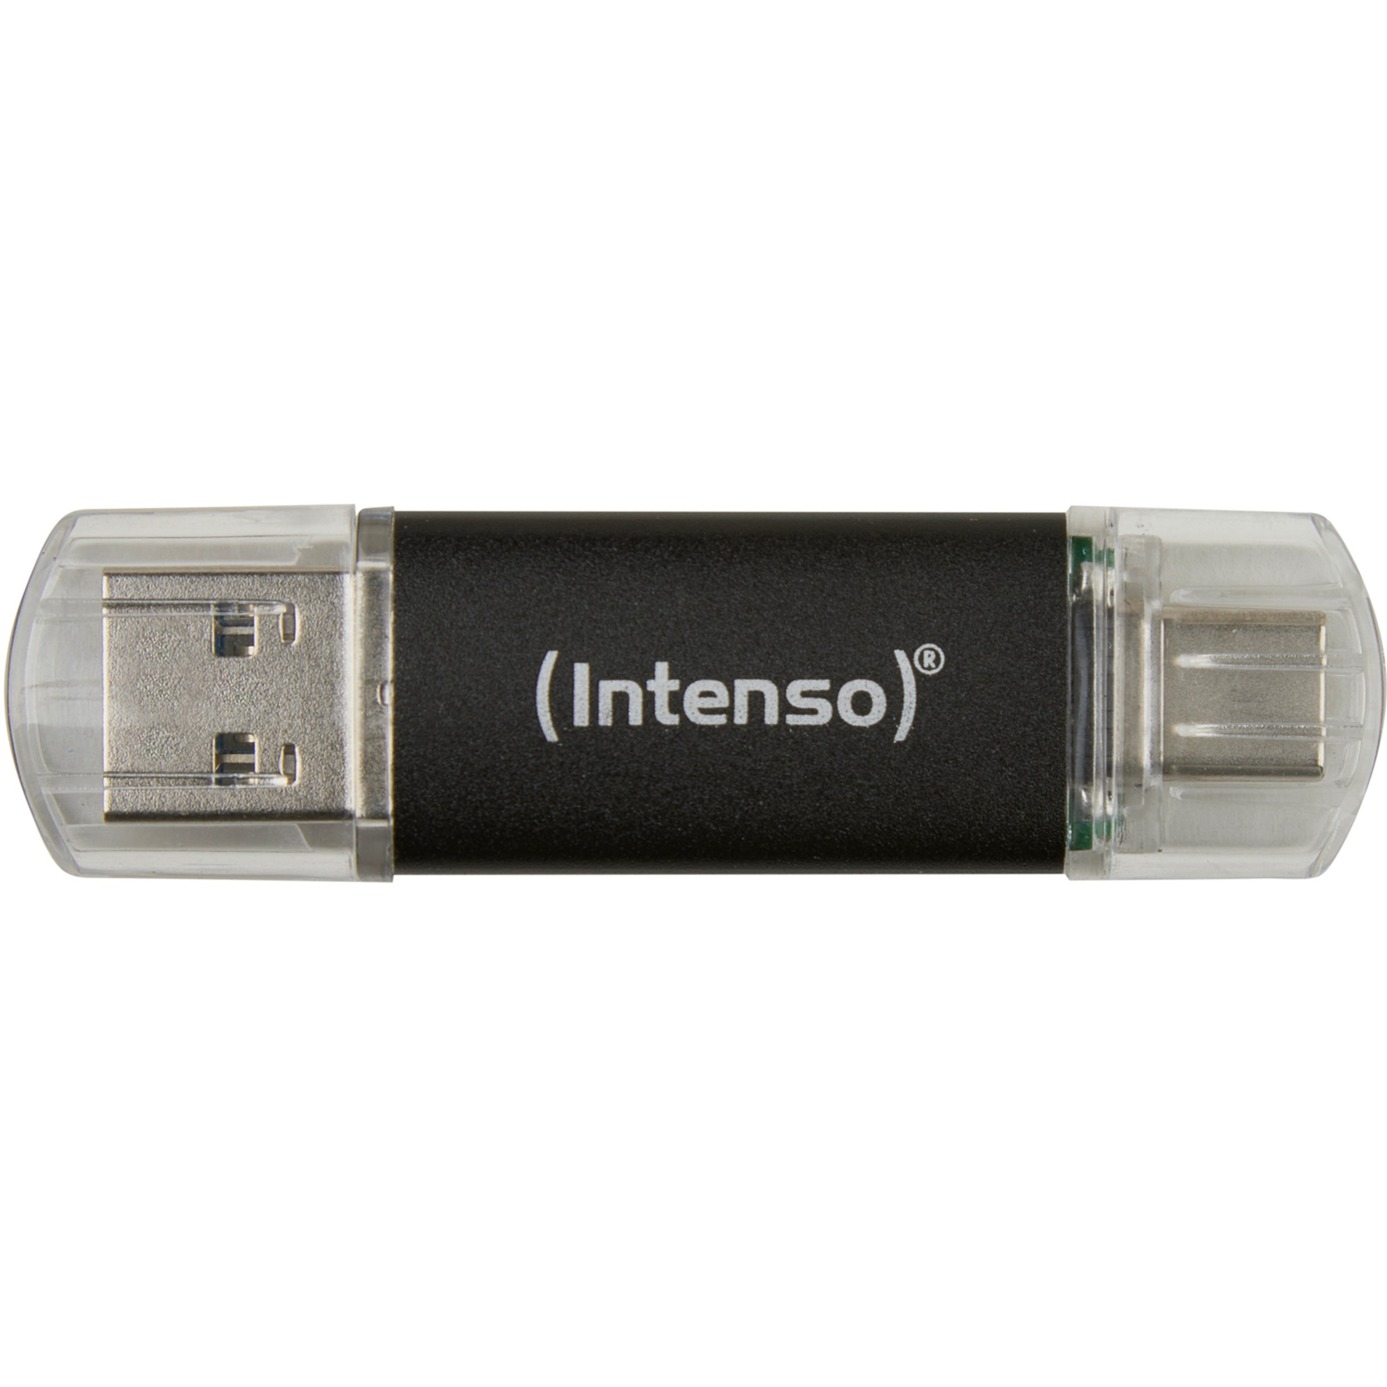 Twist Line 32 GB, USB-Stick von Intenso